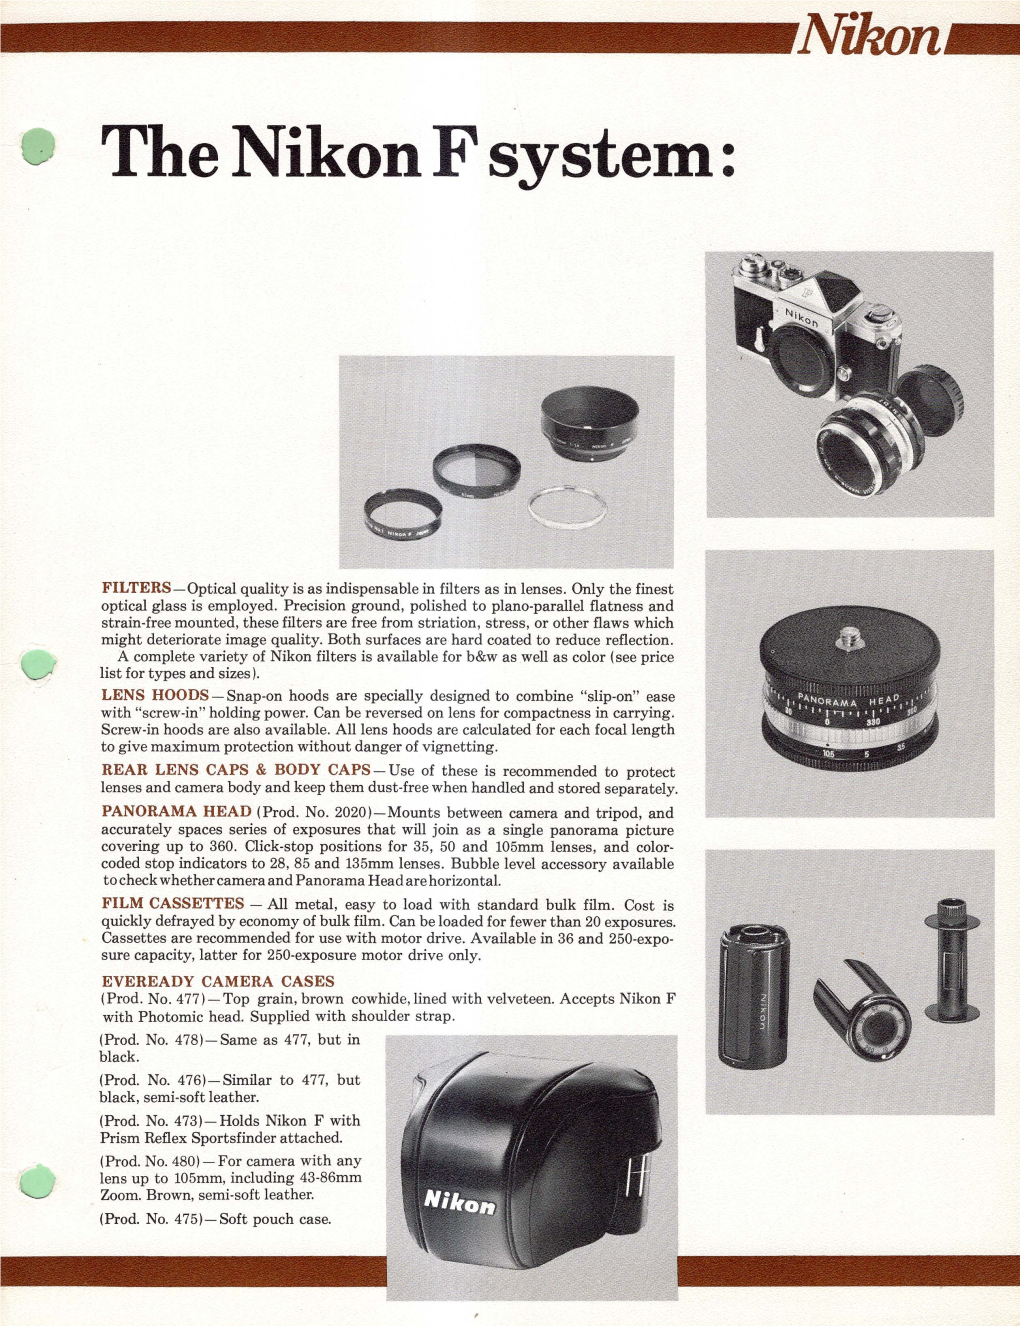 The Nikon F System